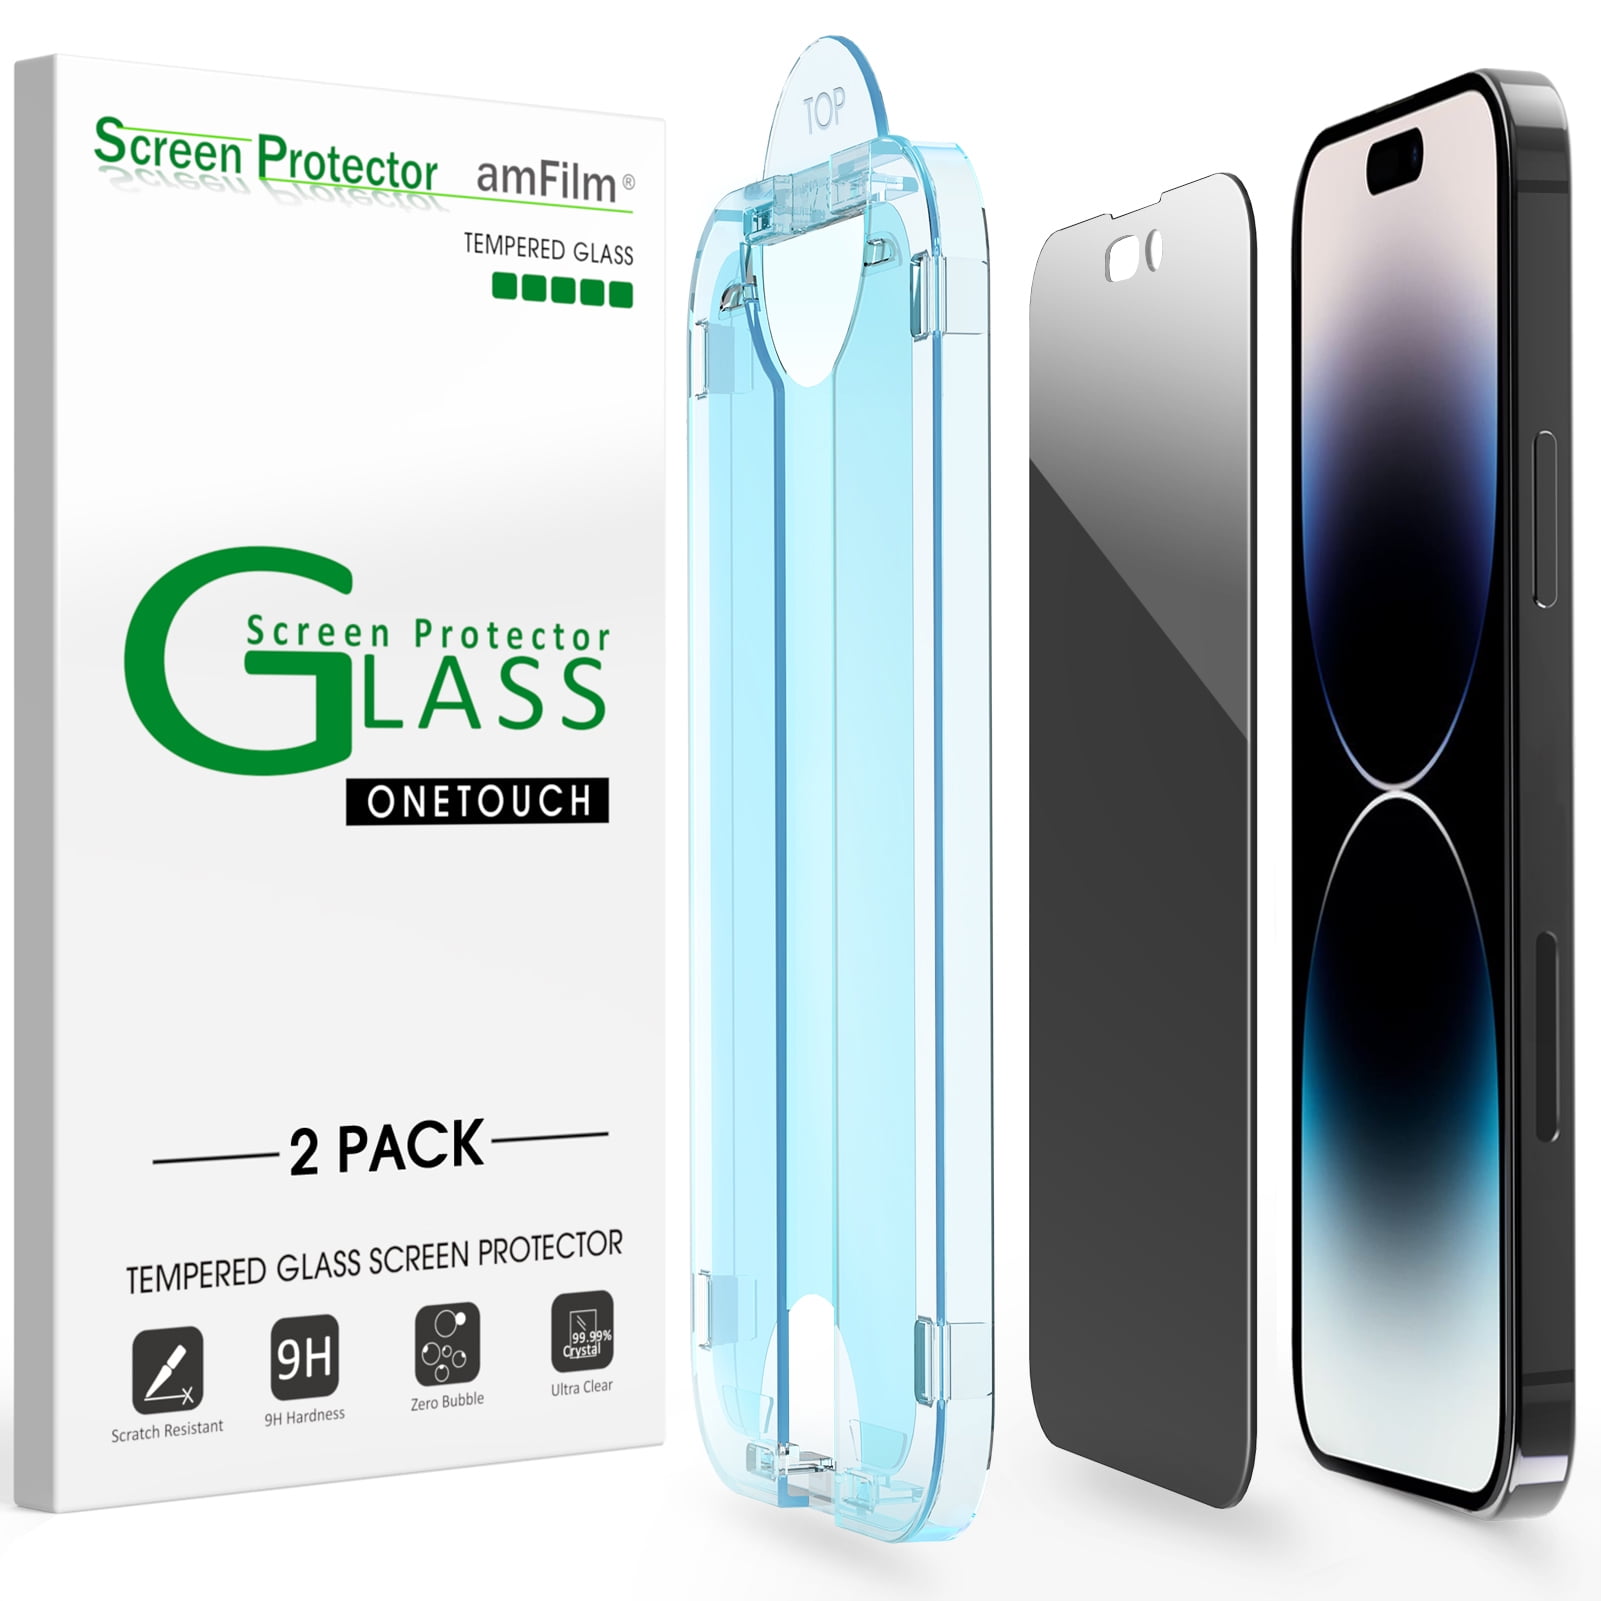 1-6 Tempered Glass i phone 14 Pro Max Screen Protector iphone14 Glass For iphone  14 13 Película iPhone-14 cristal templado i14 - AliExpress